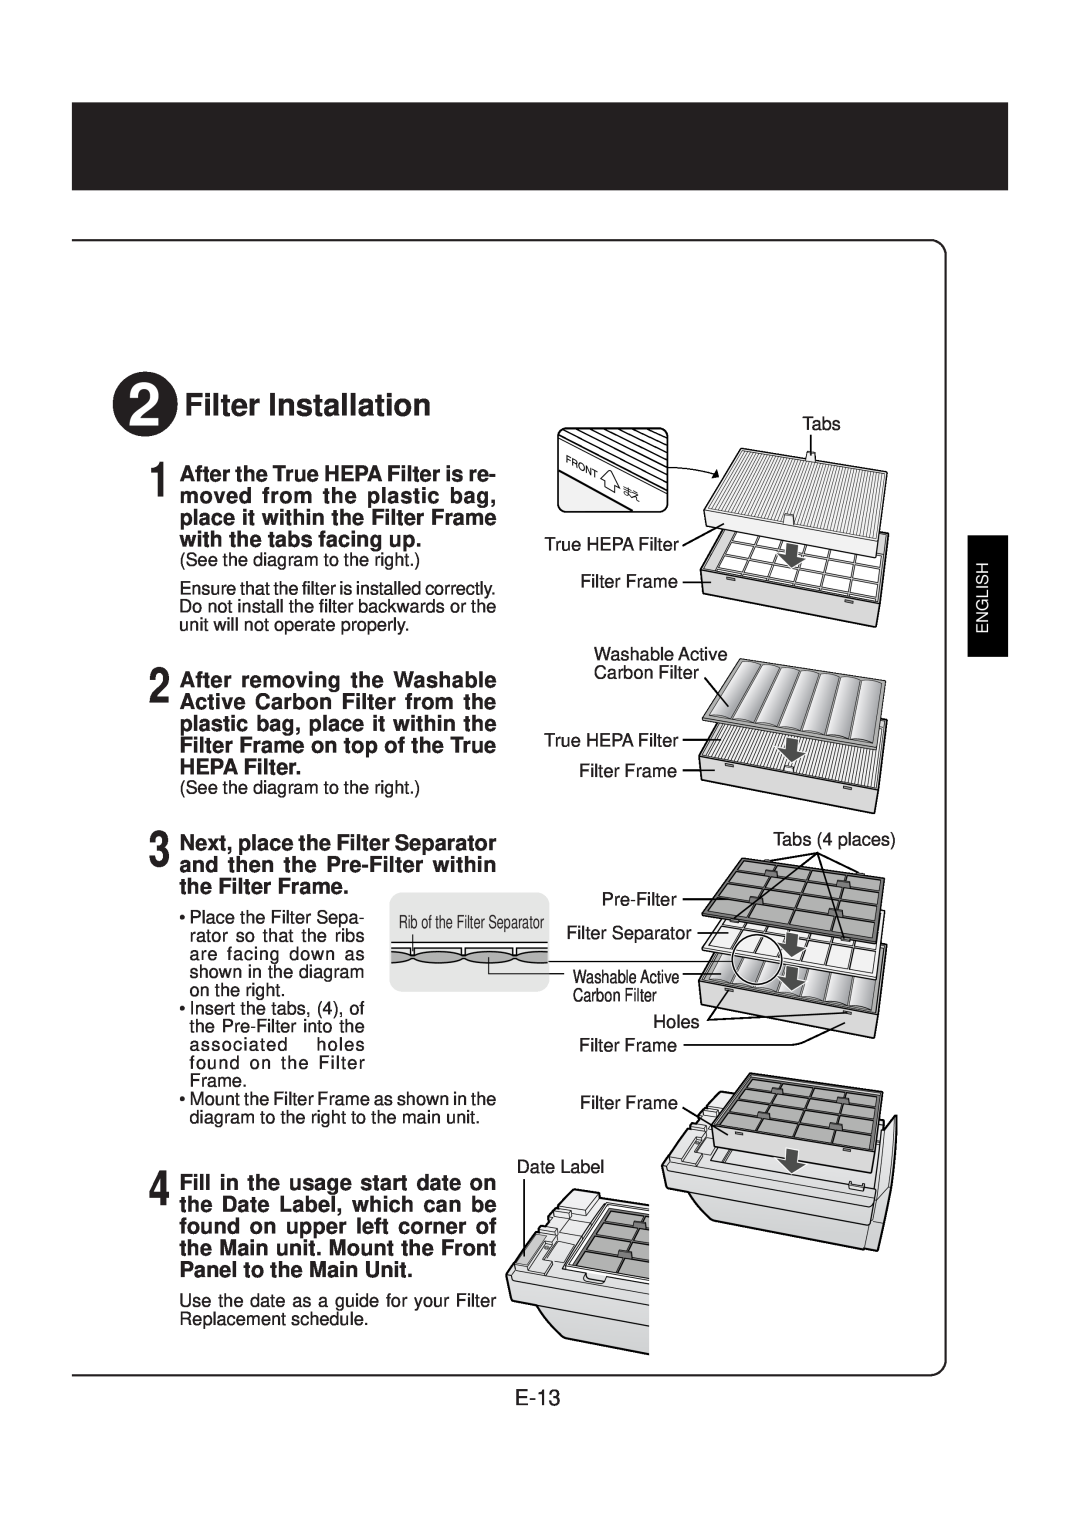 Sharp FP-N60CX operation manual Filter Installation, E-13 